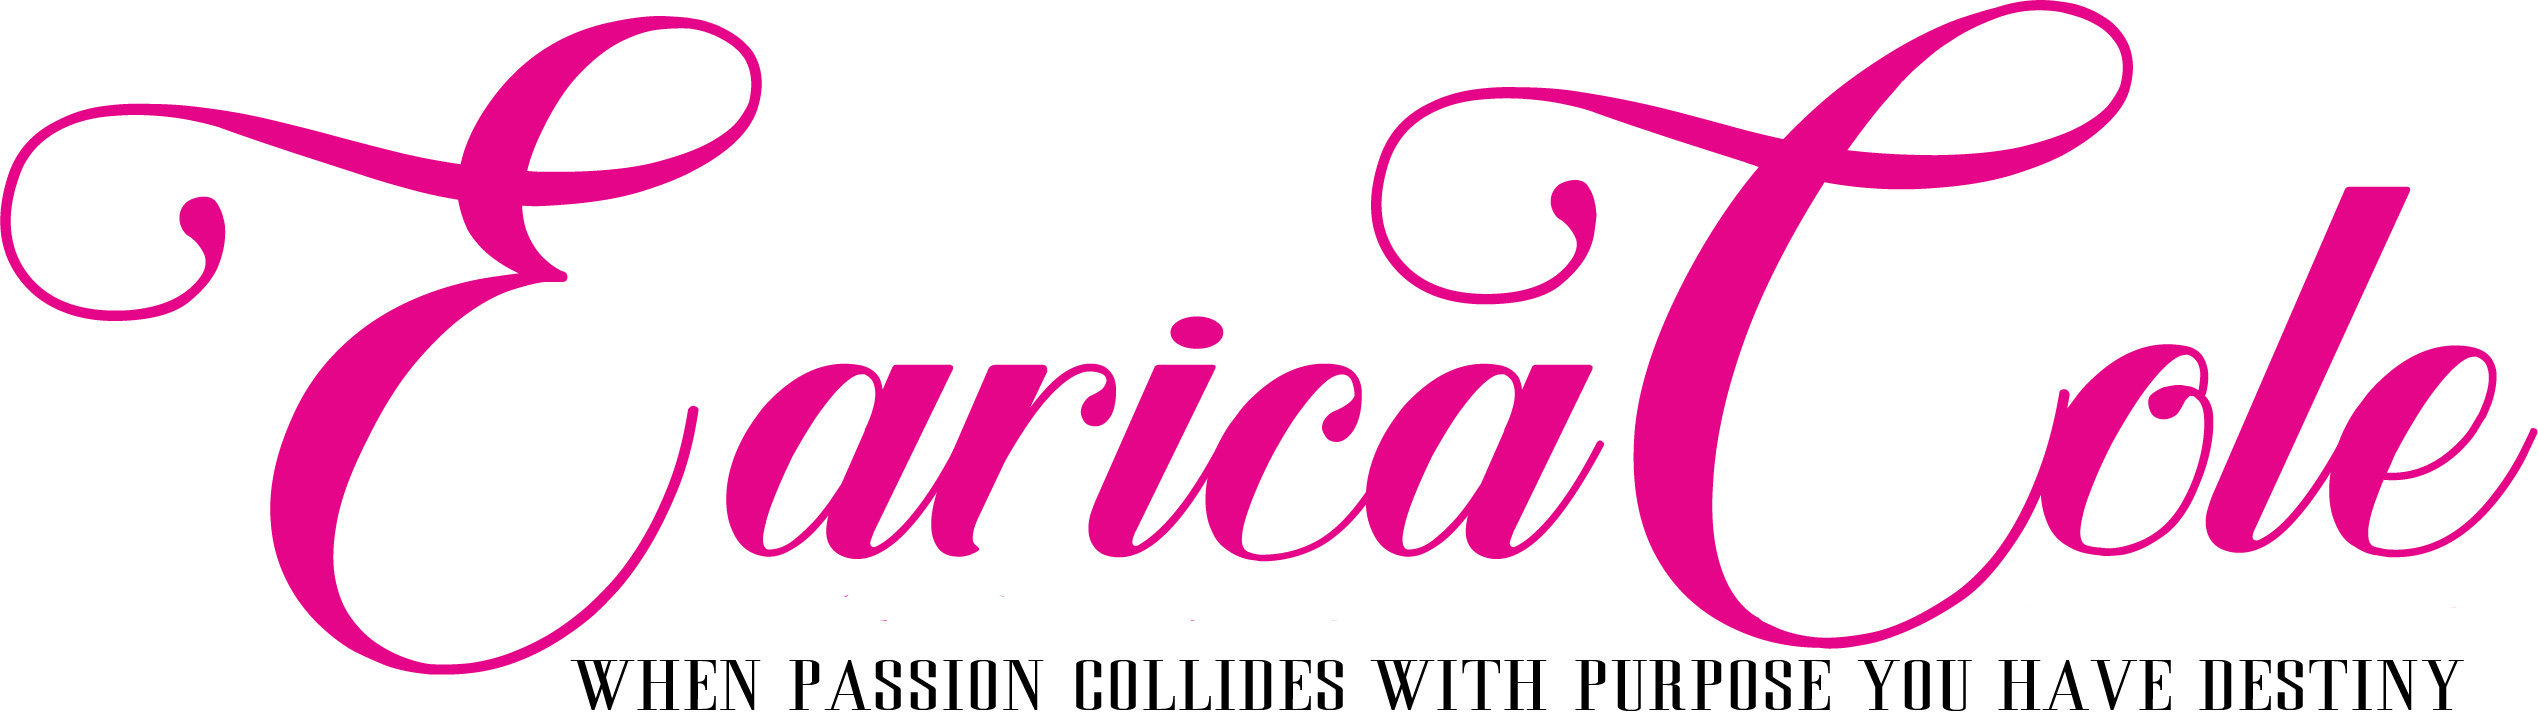 EaricaCole.com Logo